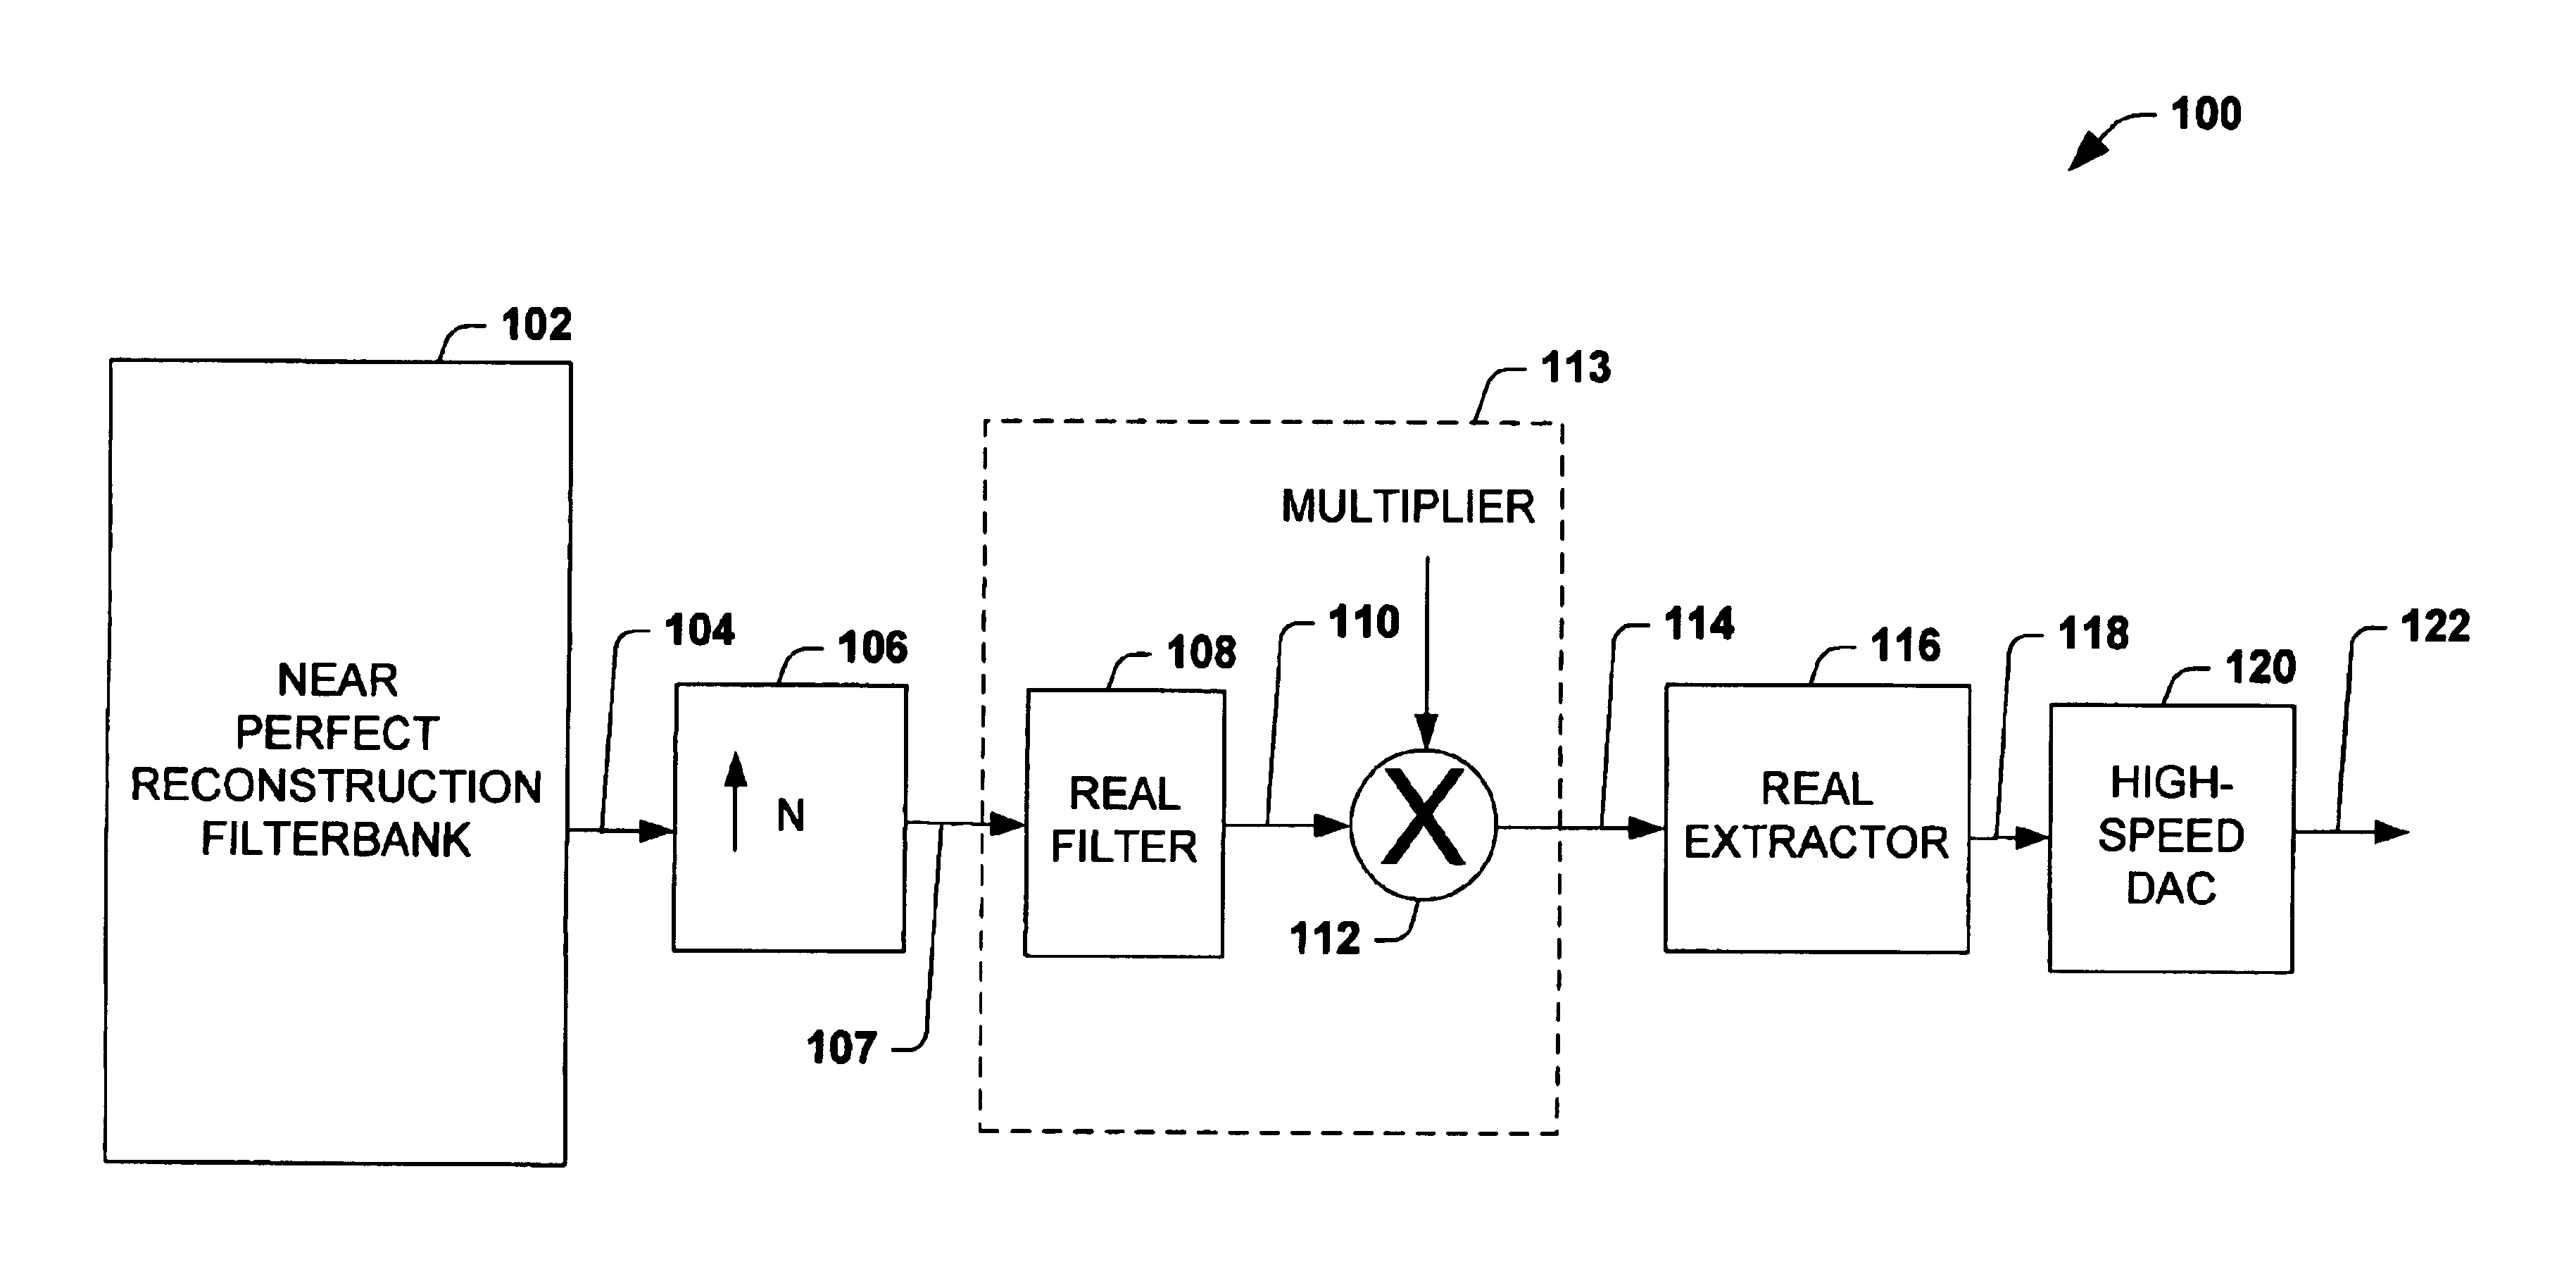 Analog reconstruction of a digital signal